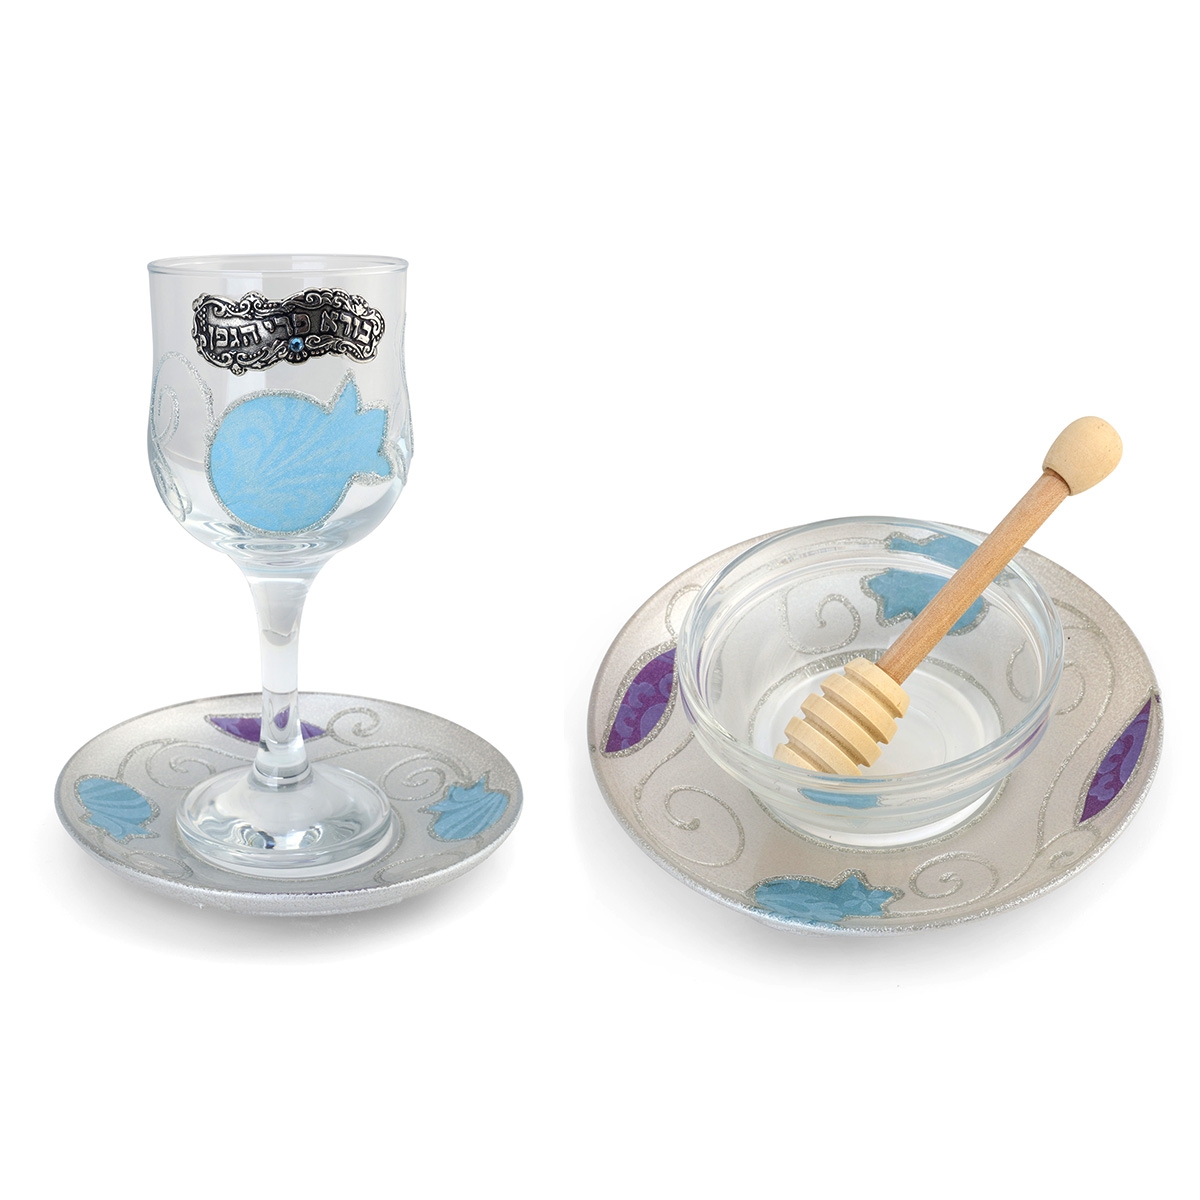 Lily Art Glass Rosh Hashanah Set - Blue & Purple Pomegranate Design - 1